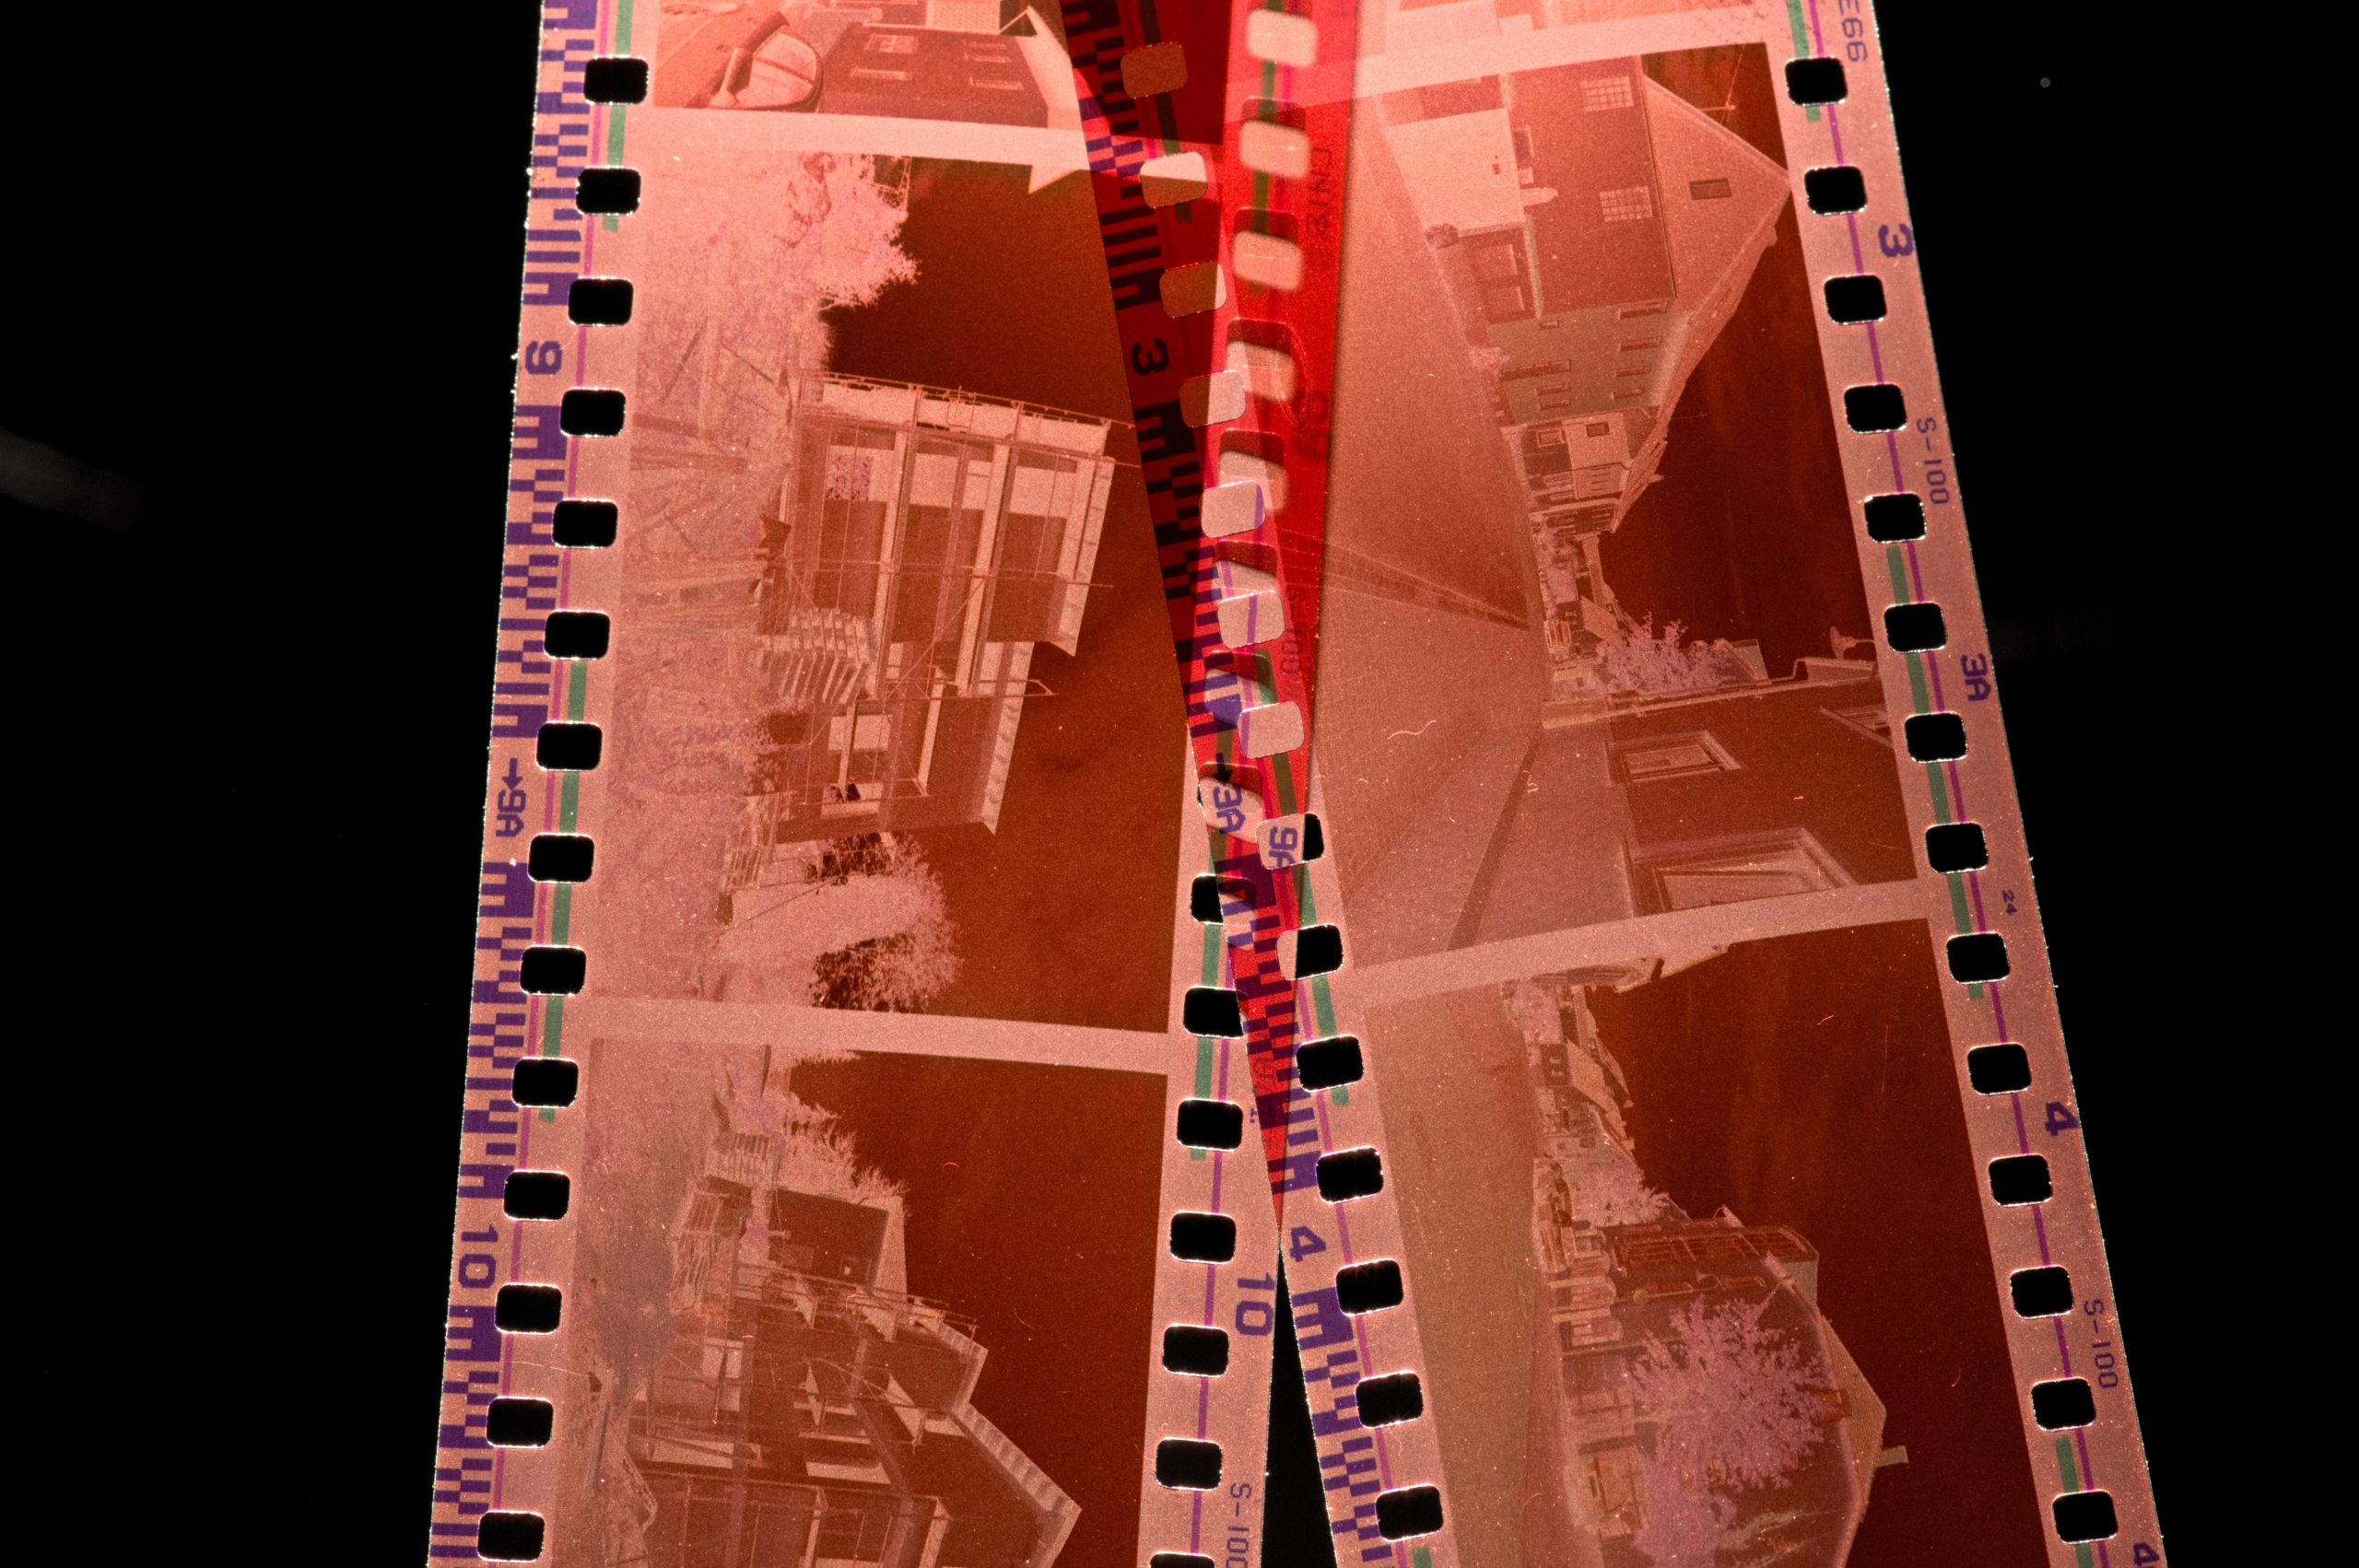 Photo negatives for scanning